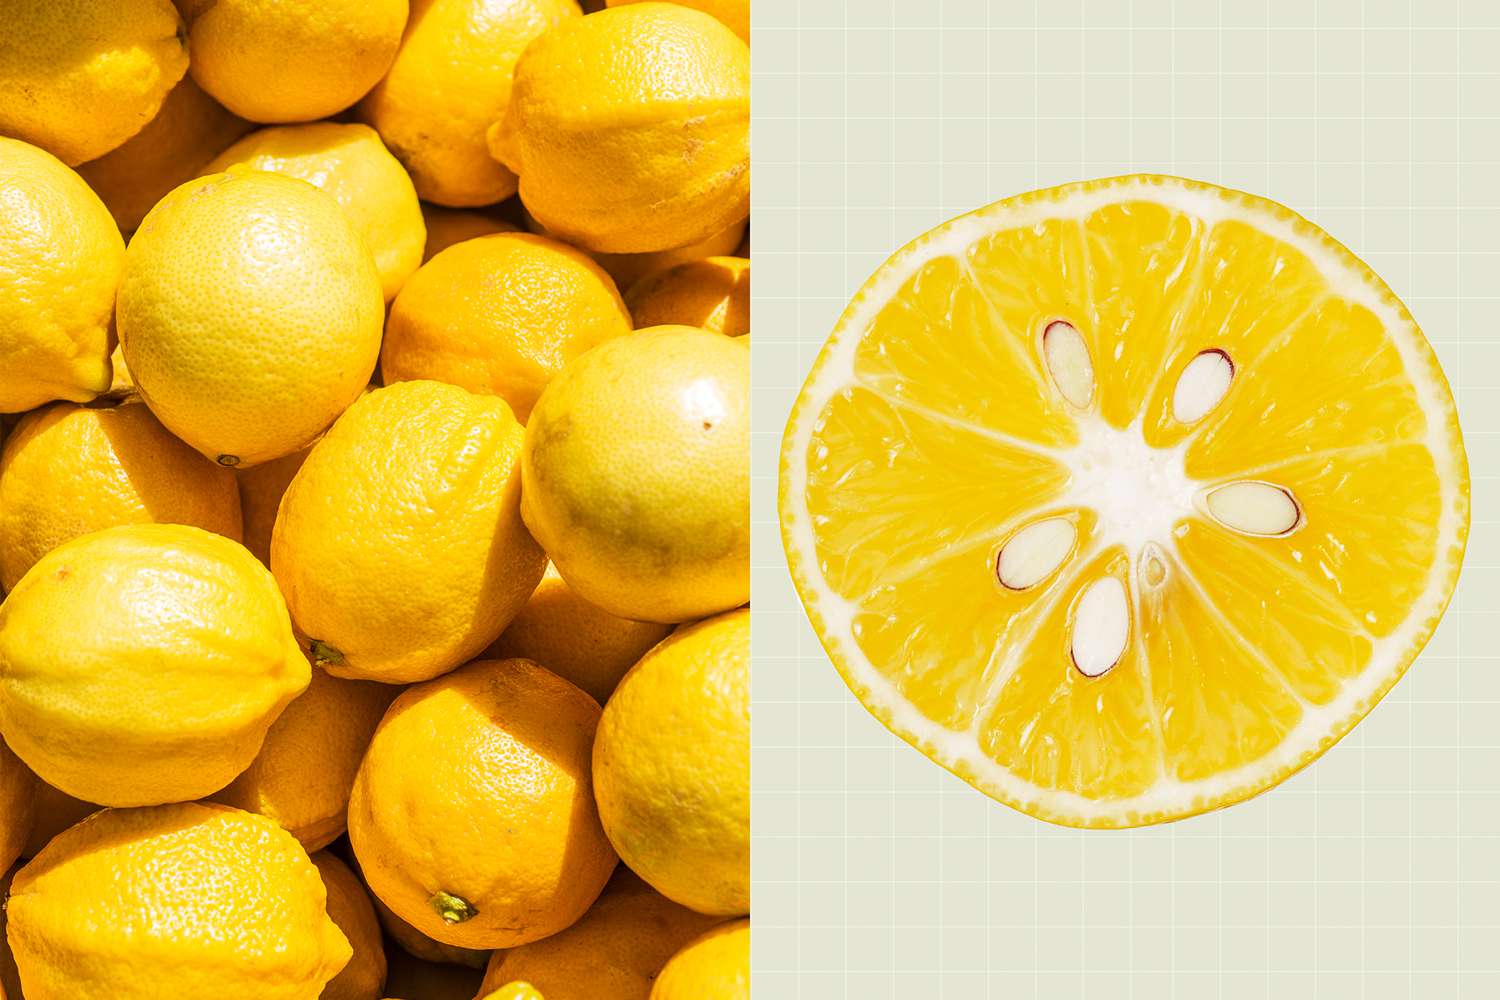 A pile of lemons next to a lemon slice on a designed background